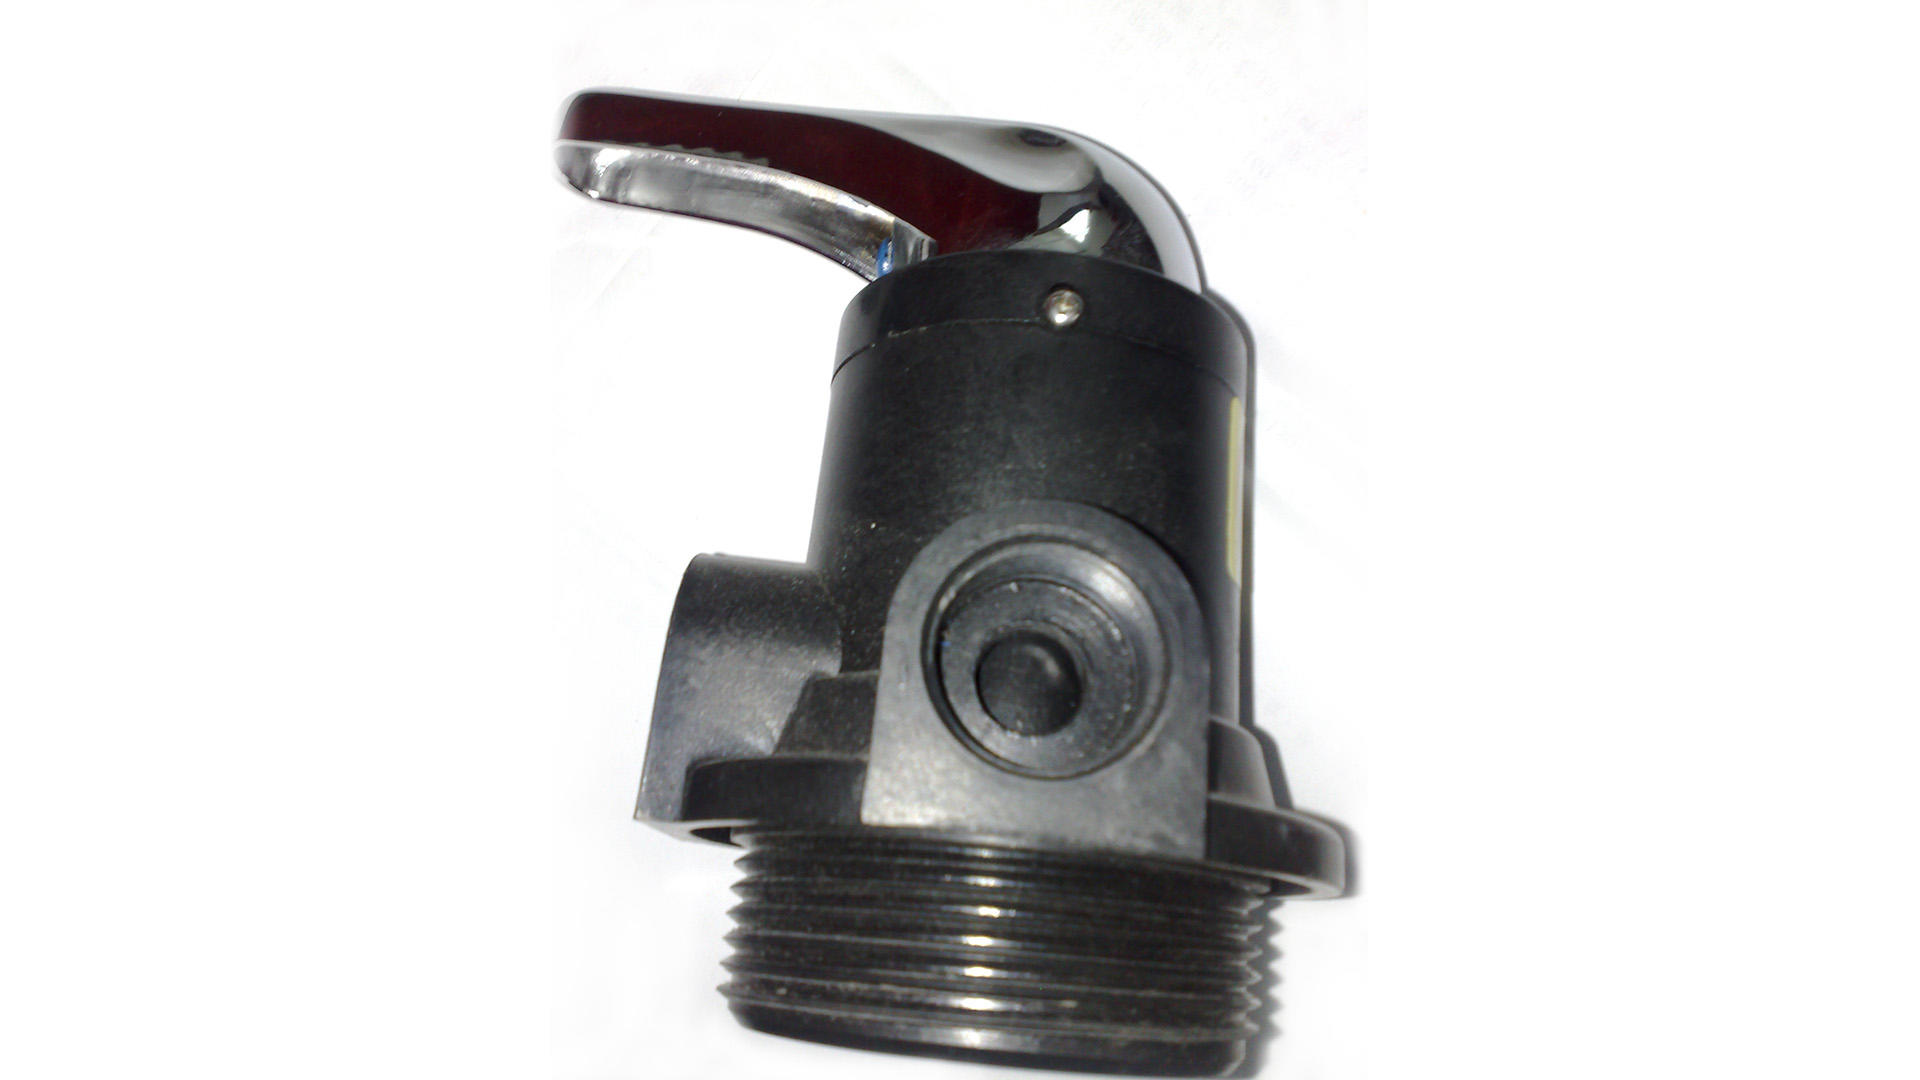 flow control valve series for factory Ocpuritech